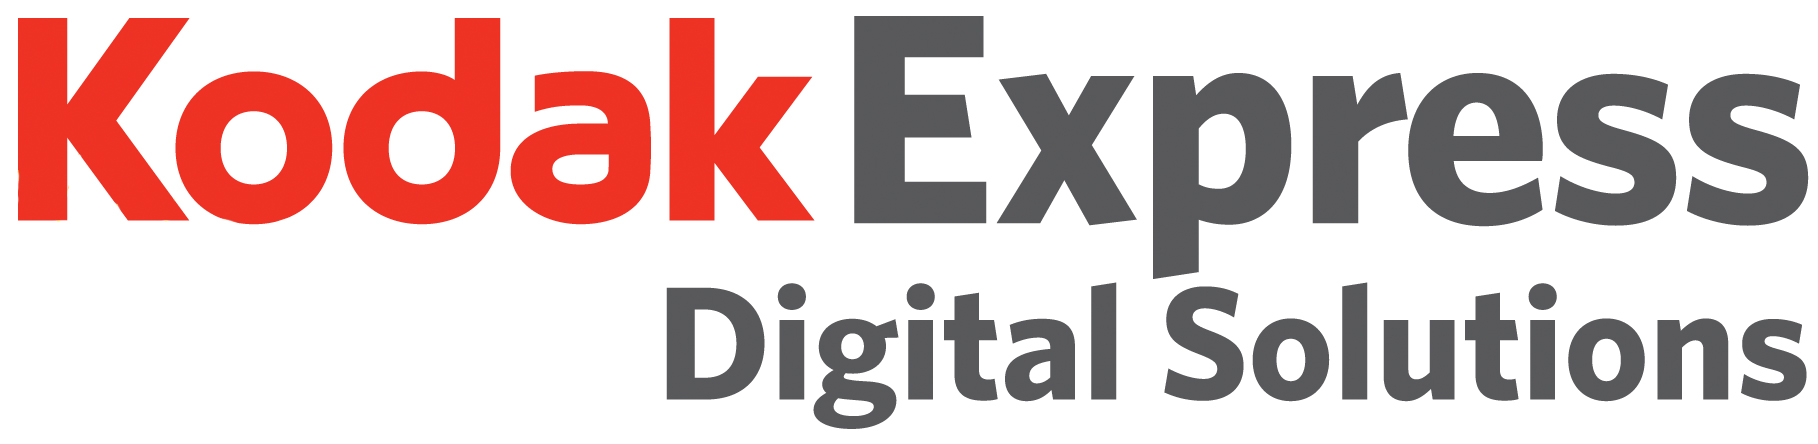 KODAK express digital solutions Logo photo - 1